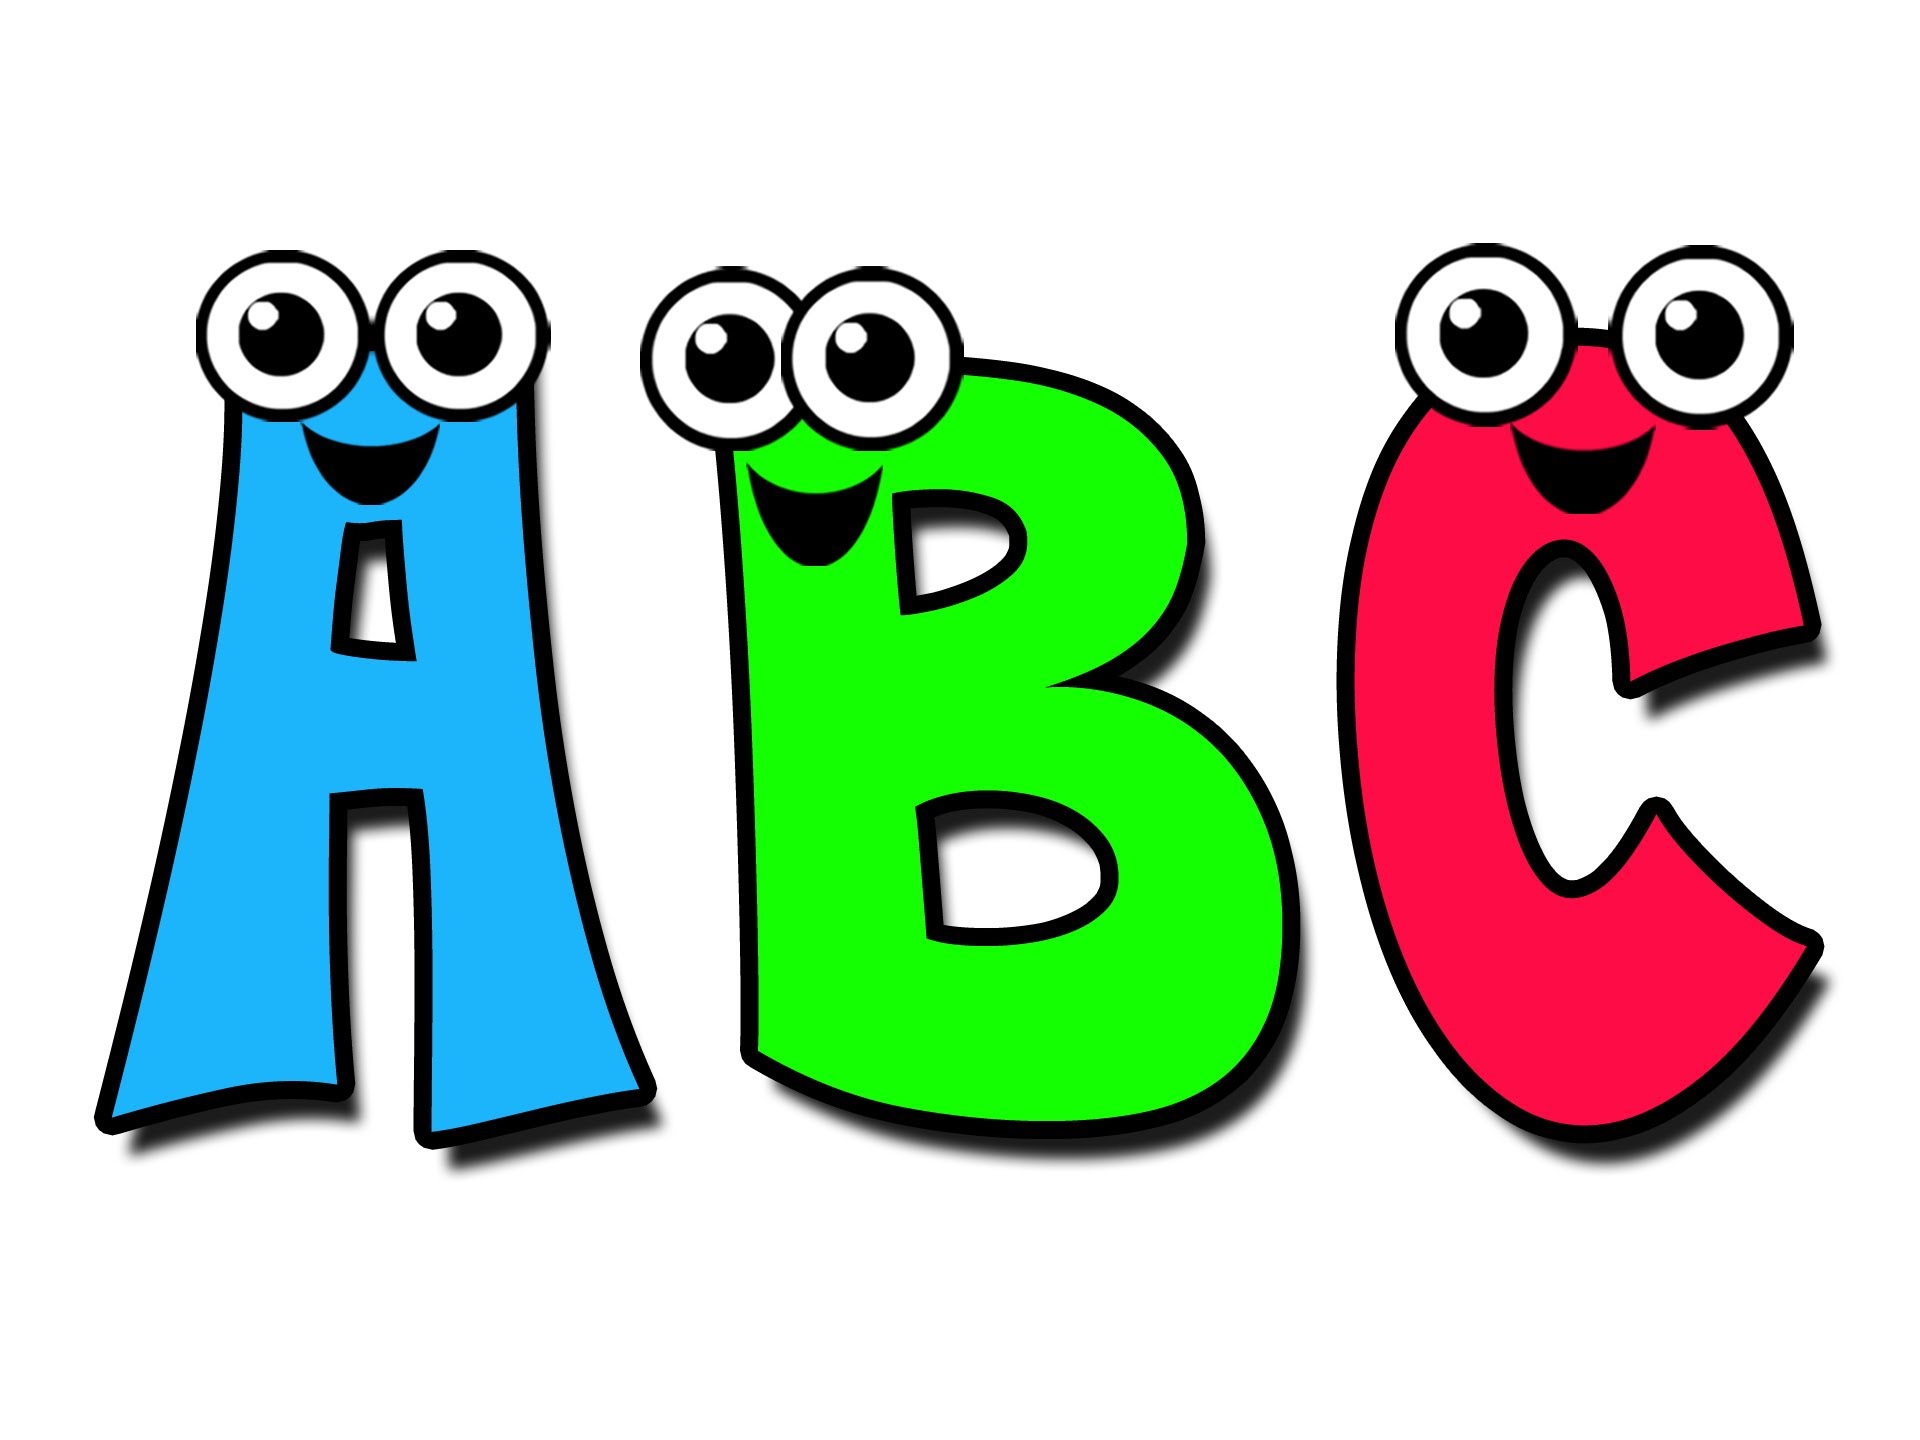 Abc clipart alphabetical order, Abc alphabetical order